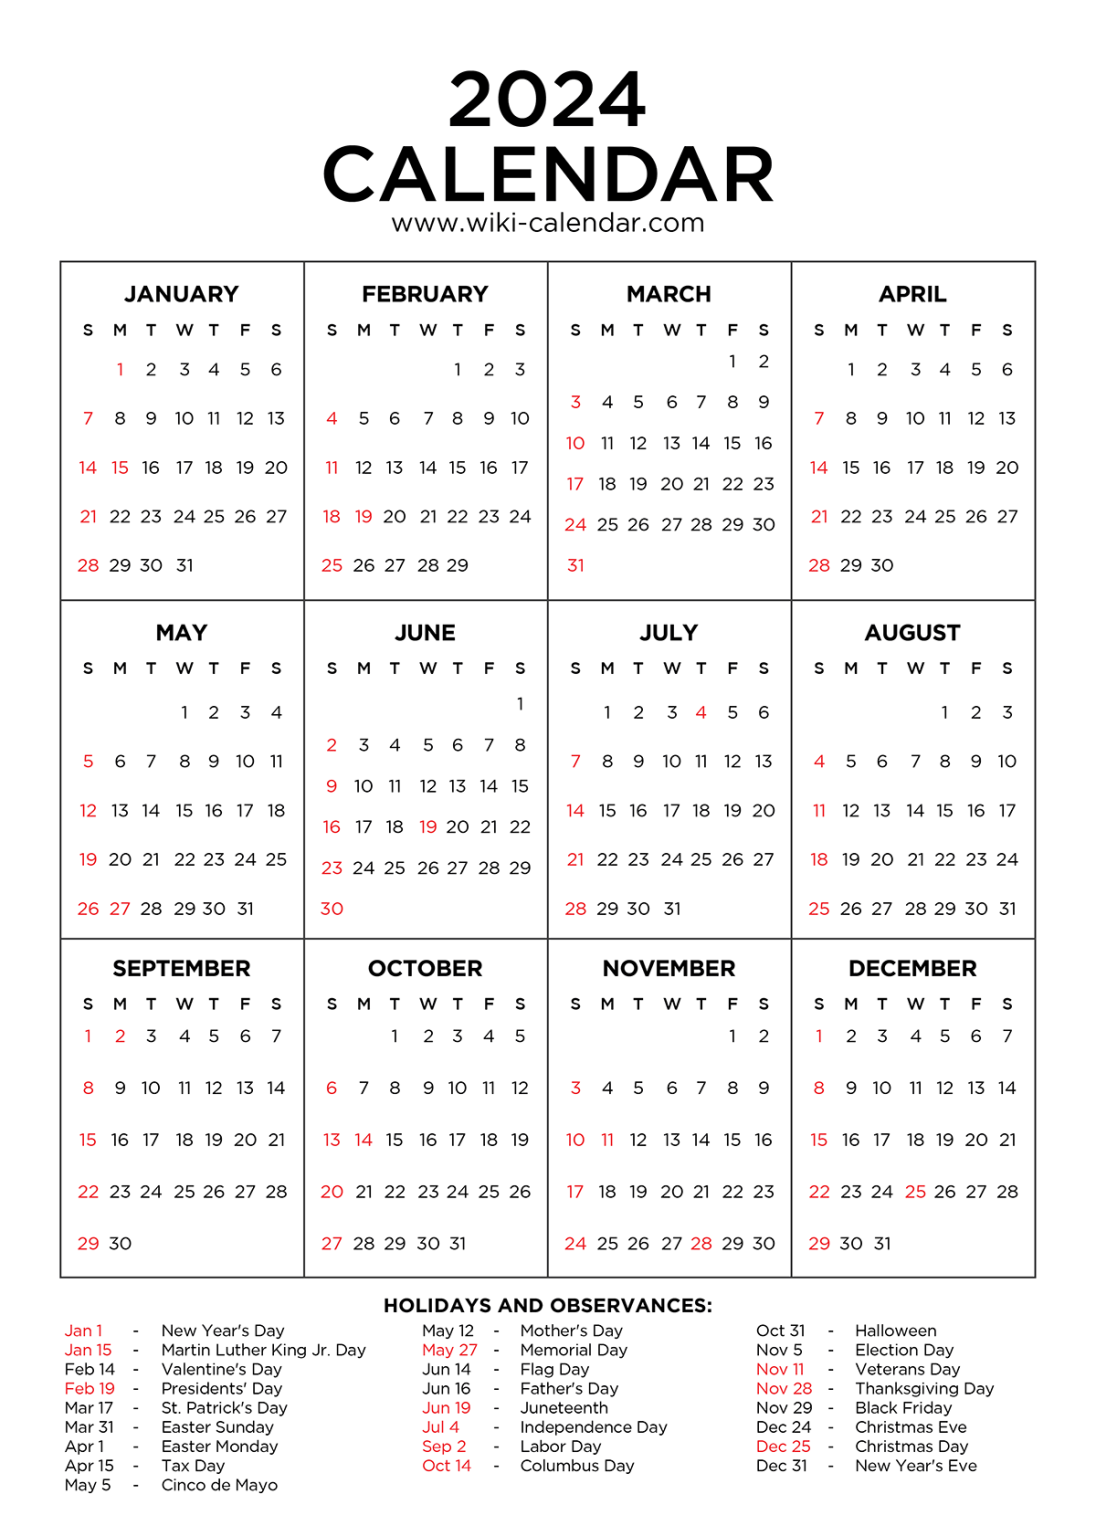 Year 2024 Calendar Printable With Holidays Wiki Calendar - Free Printable 2024 Calendar Holidays